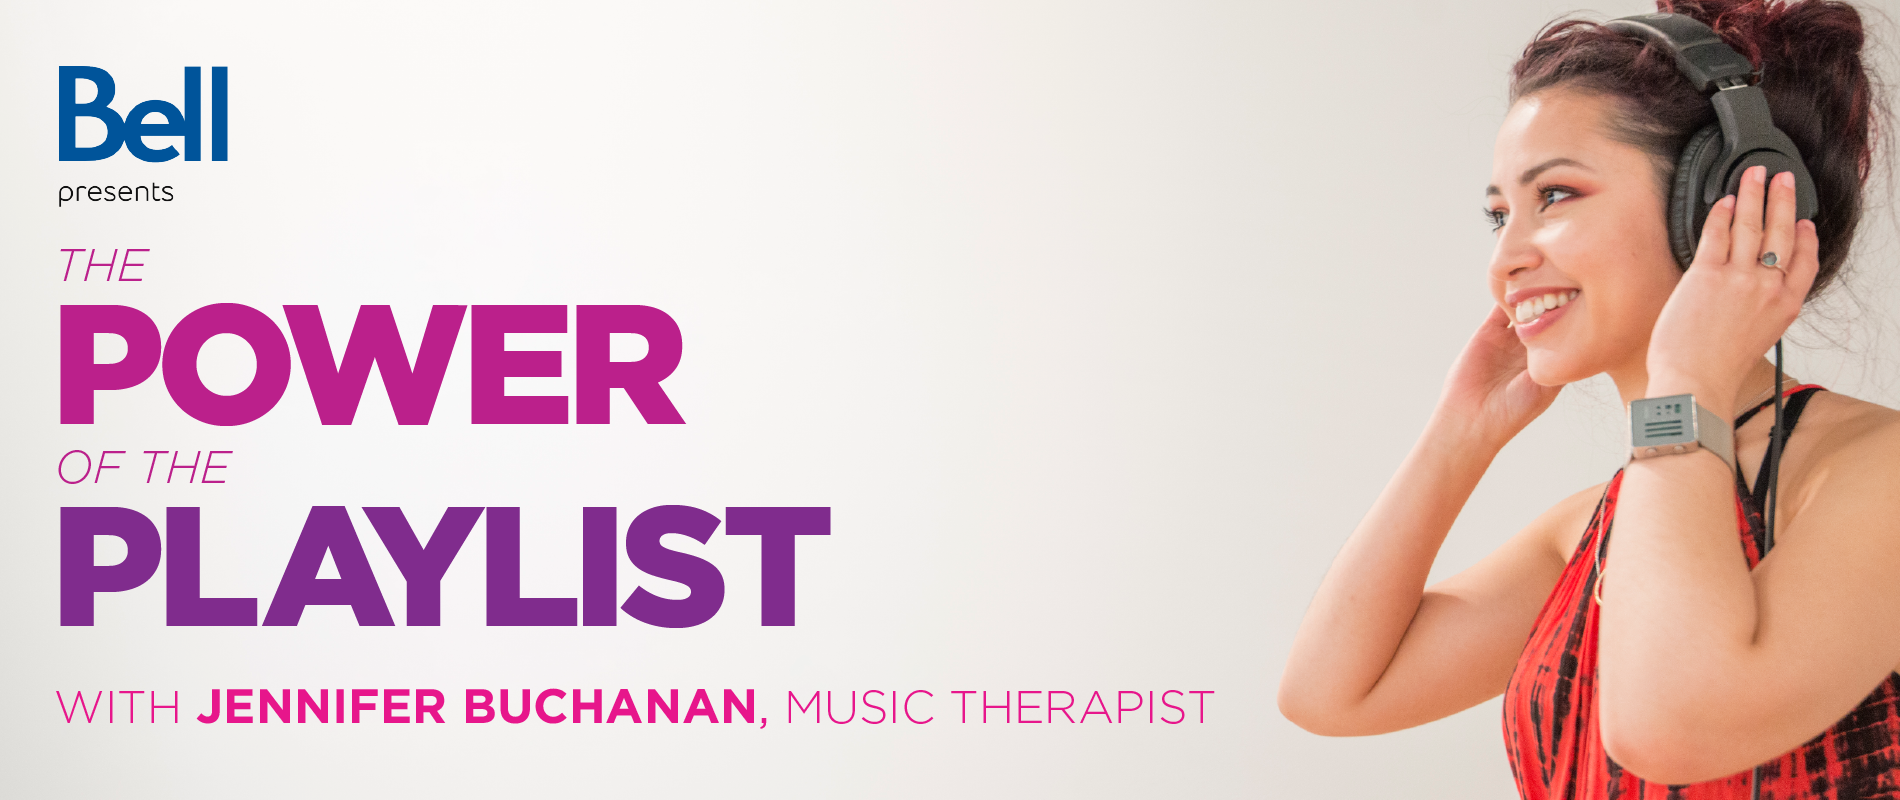 National Music Centre Announces the Power of the Playlist Program with Award-Winning Music Therapist, Jennifer Buchanan